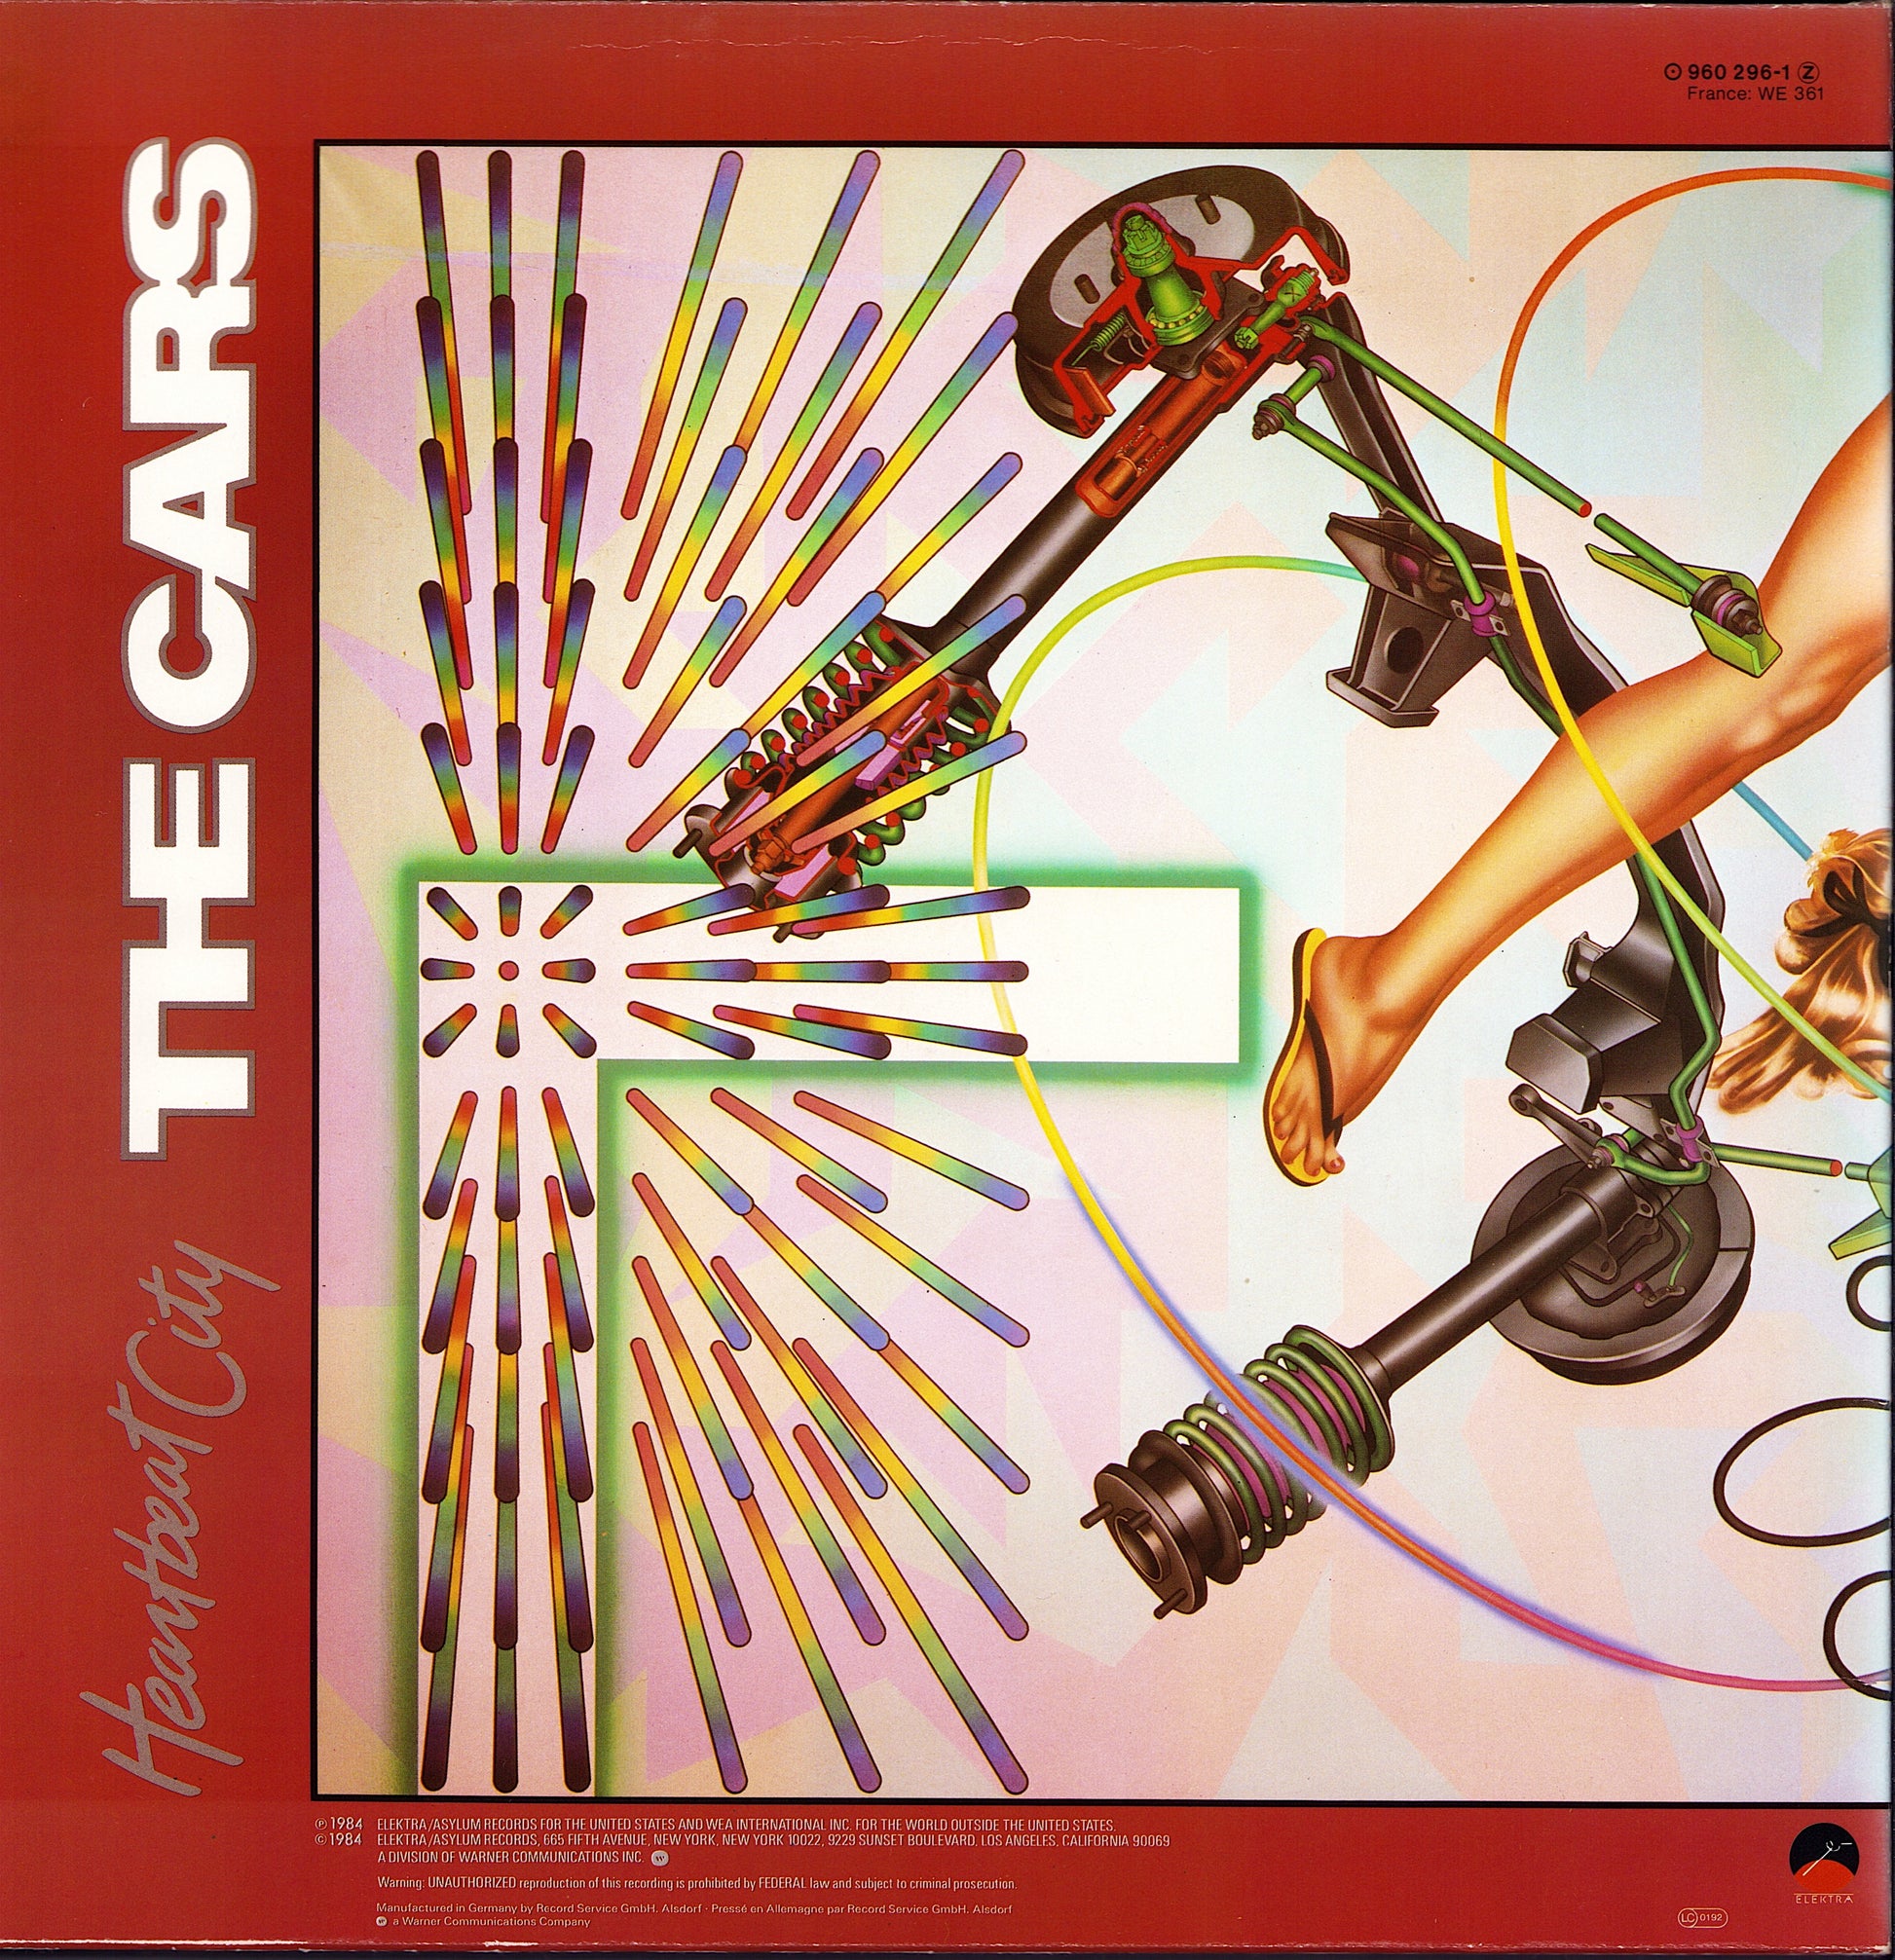 The Cars - Heartbeat City VinylLP